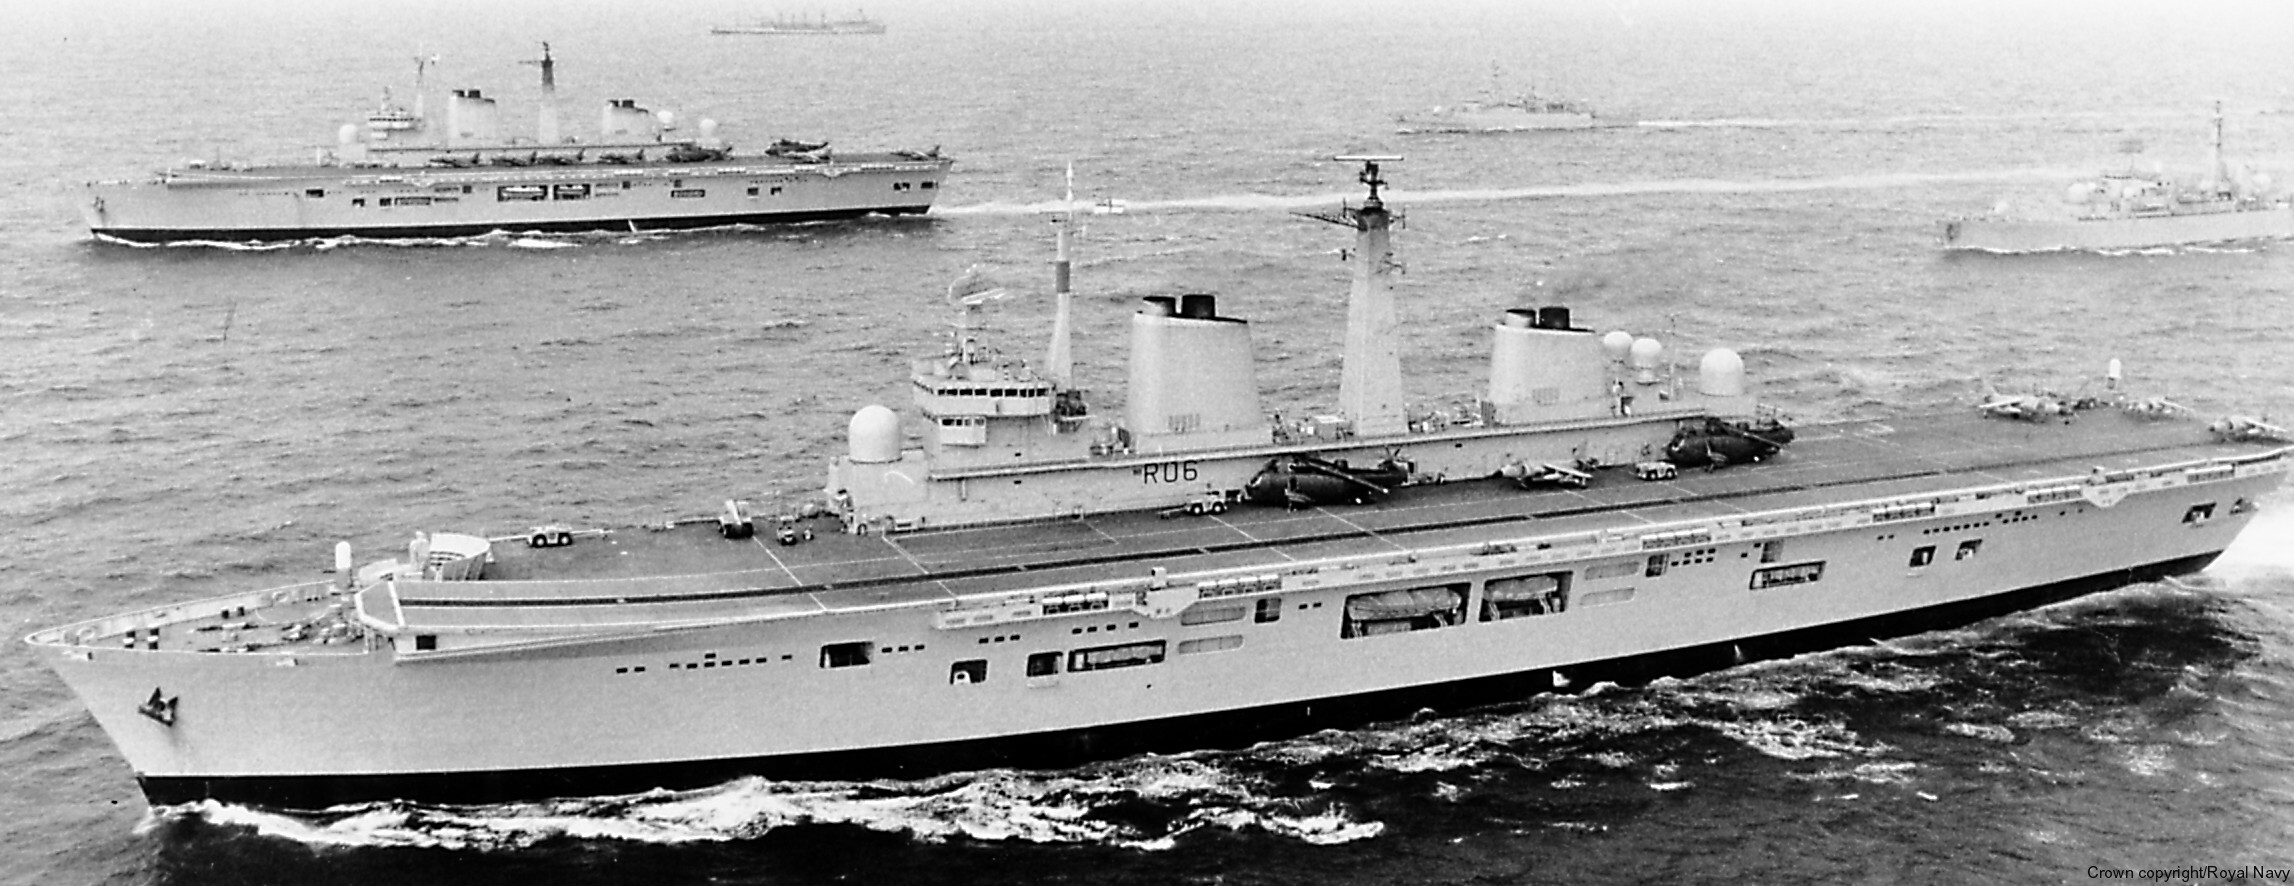 r-06 hms illustrious r06 invincible class aircraft carrier stovl royal navy 71